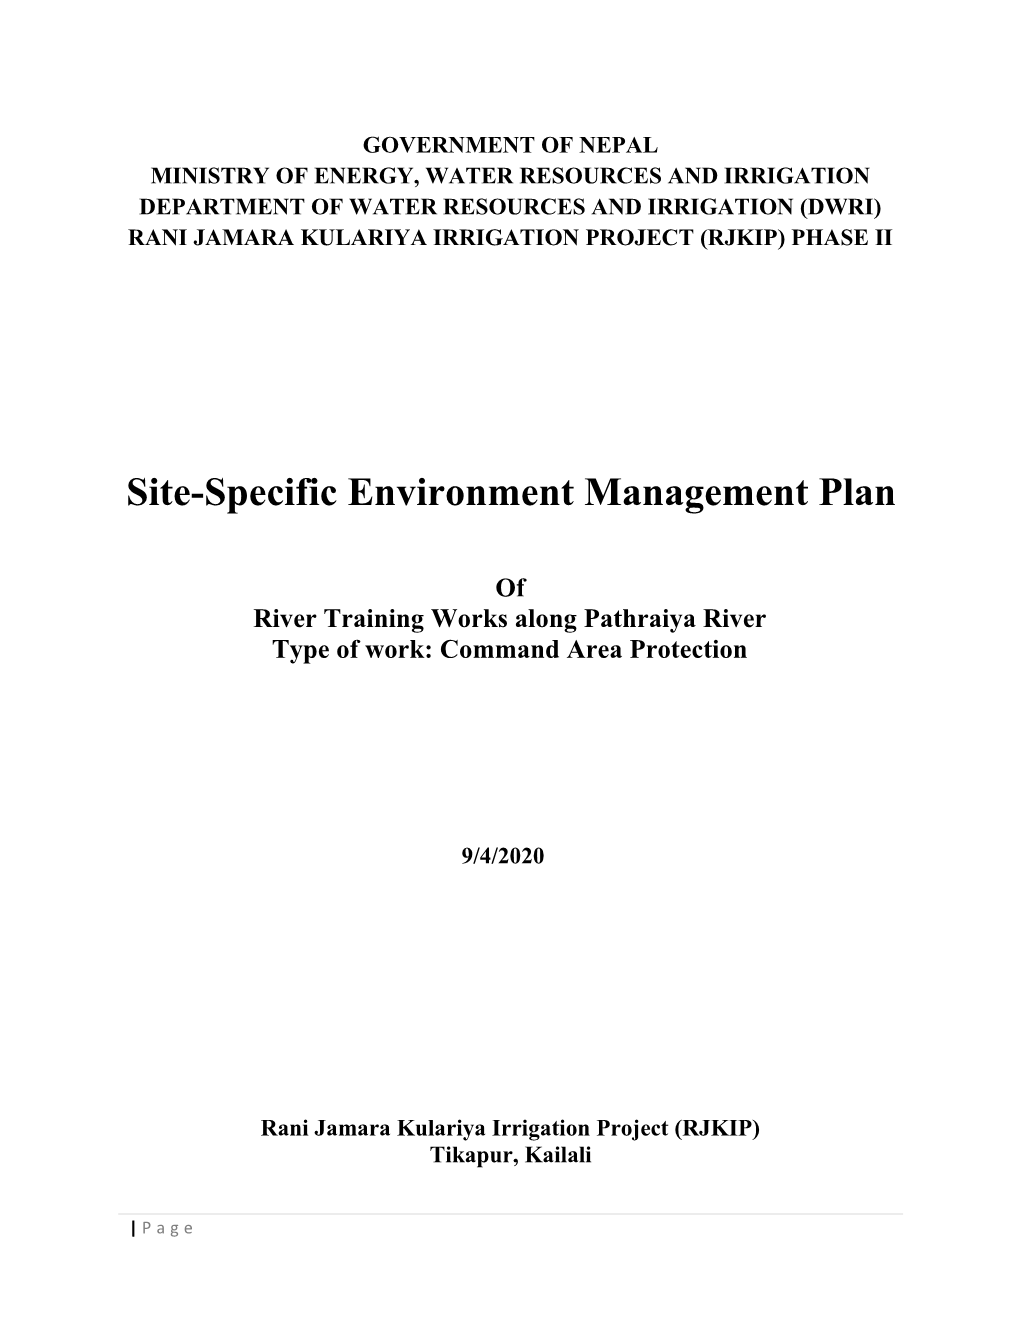 Site-Specific Environment Management Plan